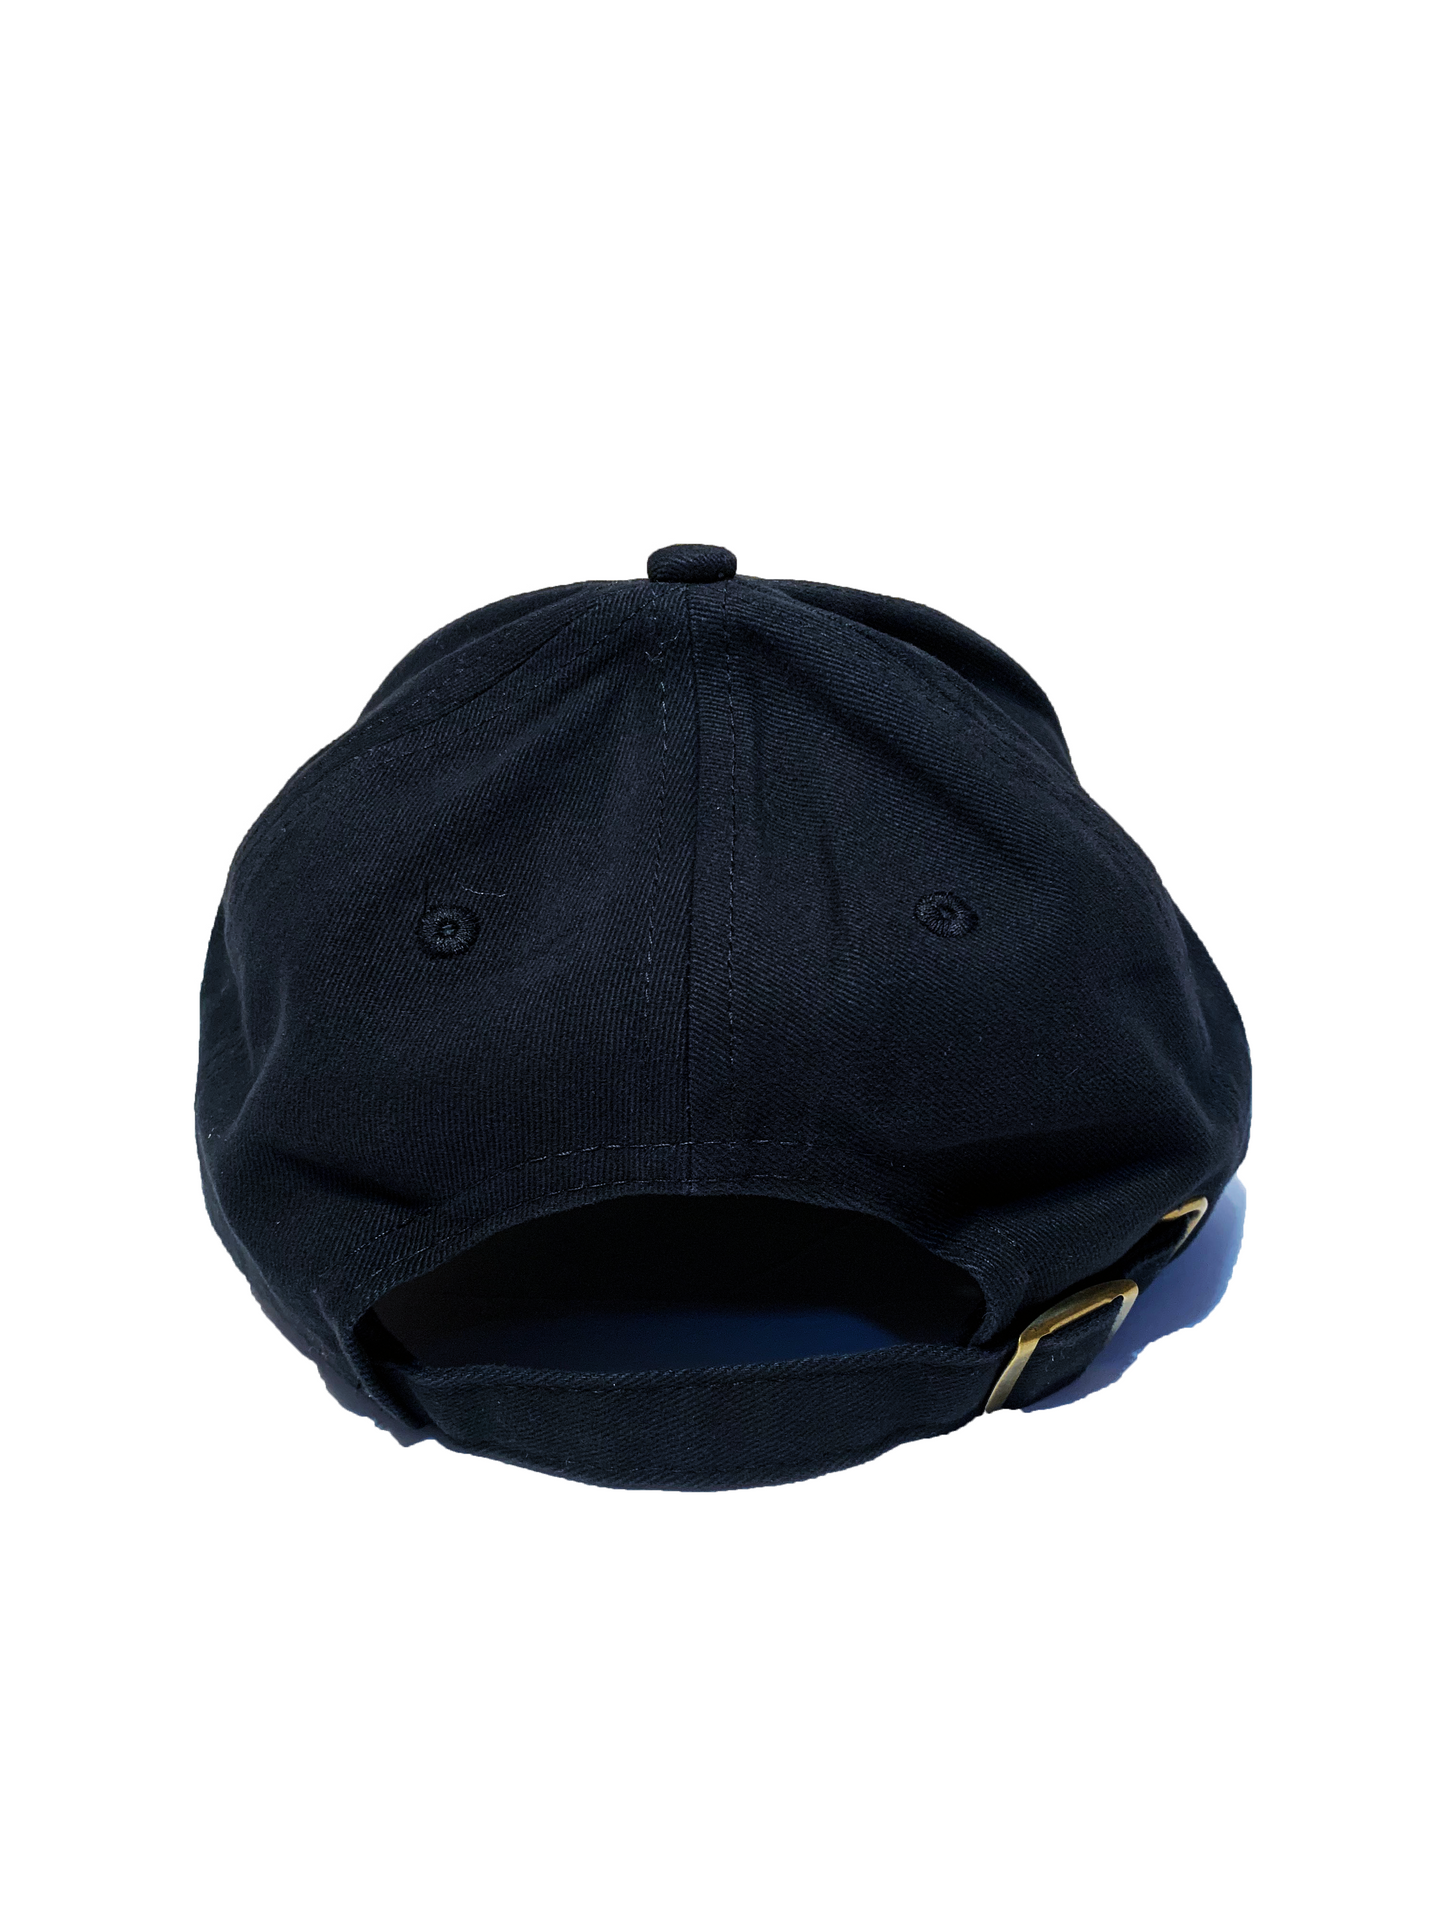 Simulated Baseball Hat Black V2